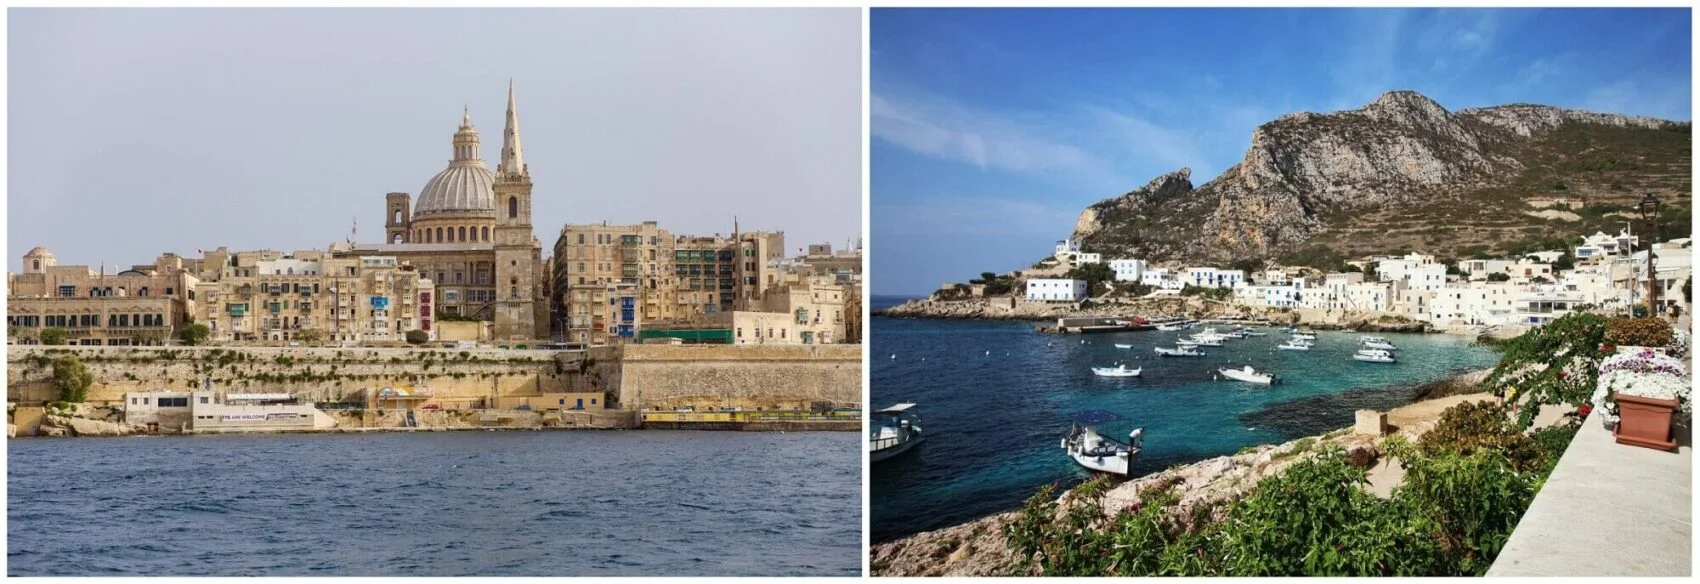 Malta and Egadi Islands